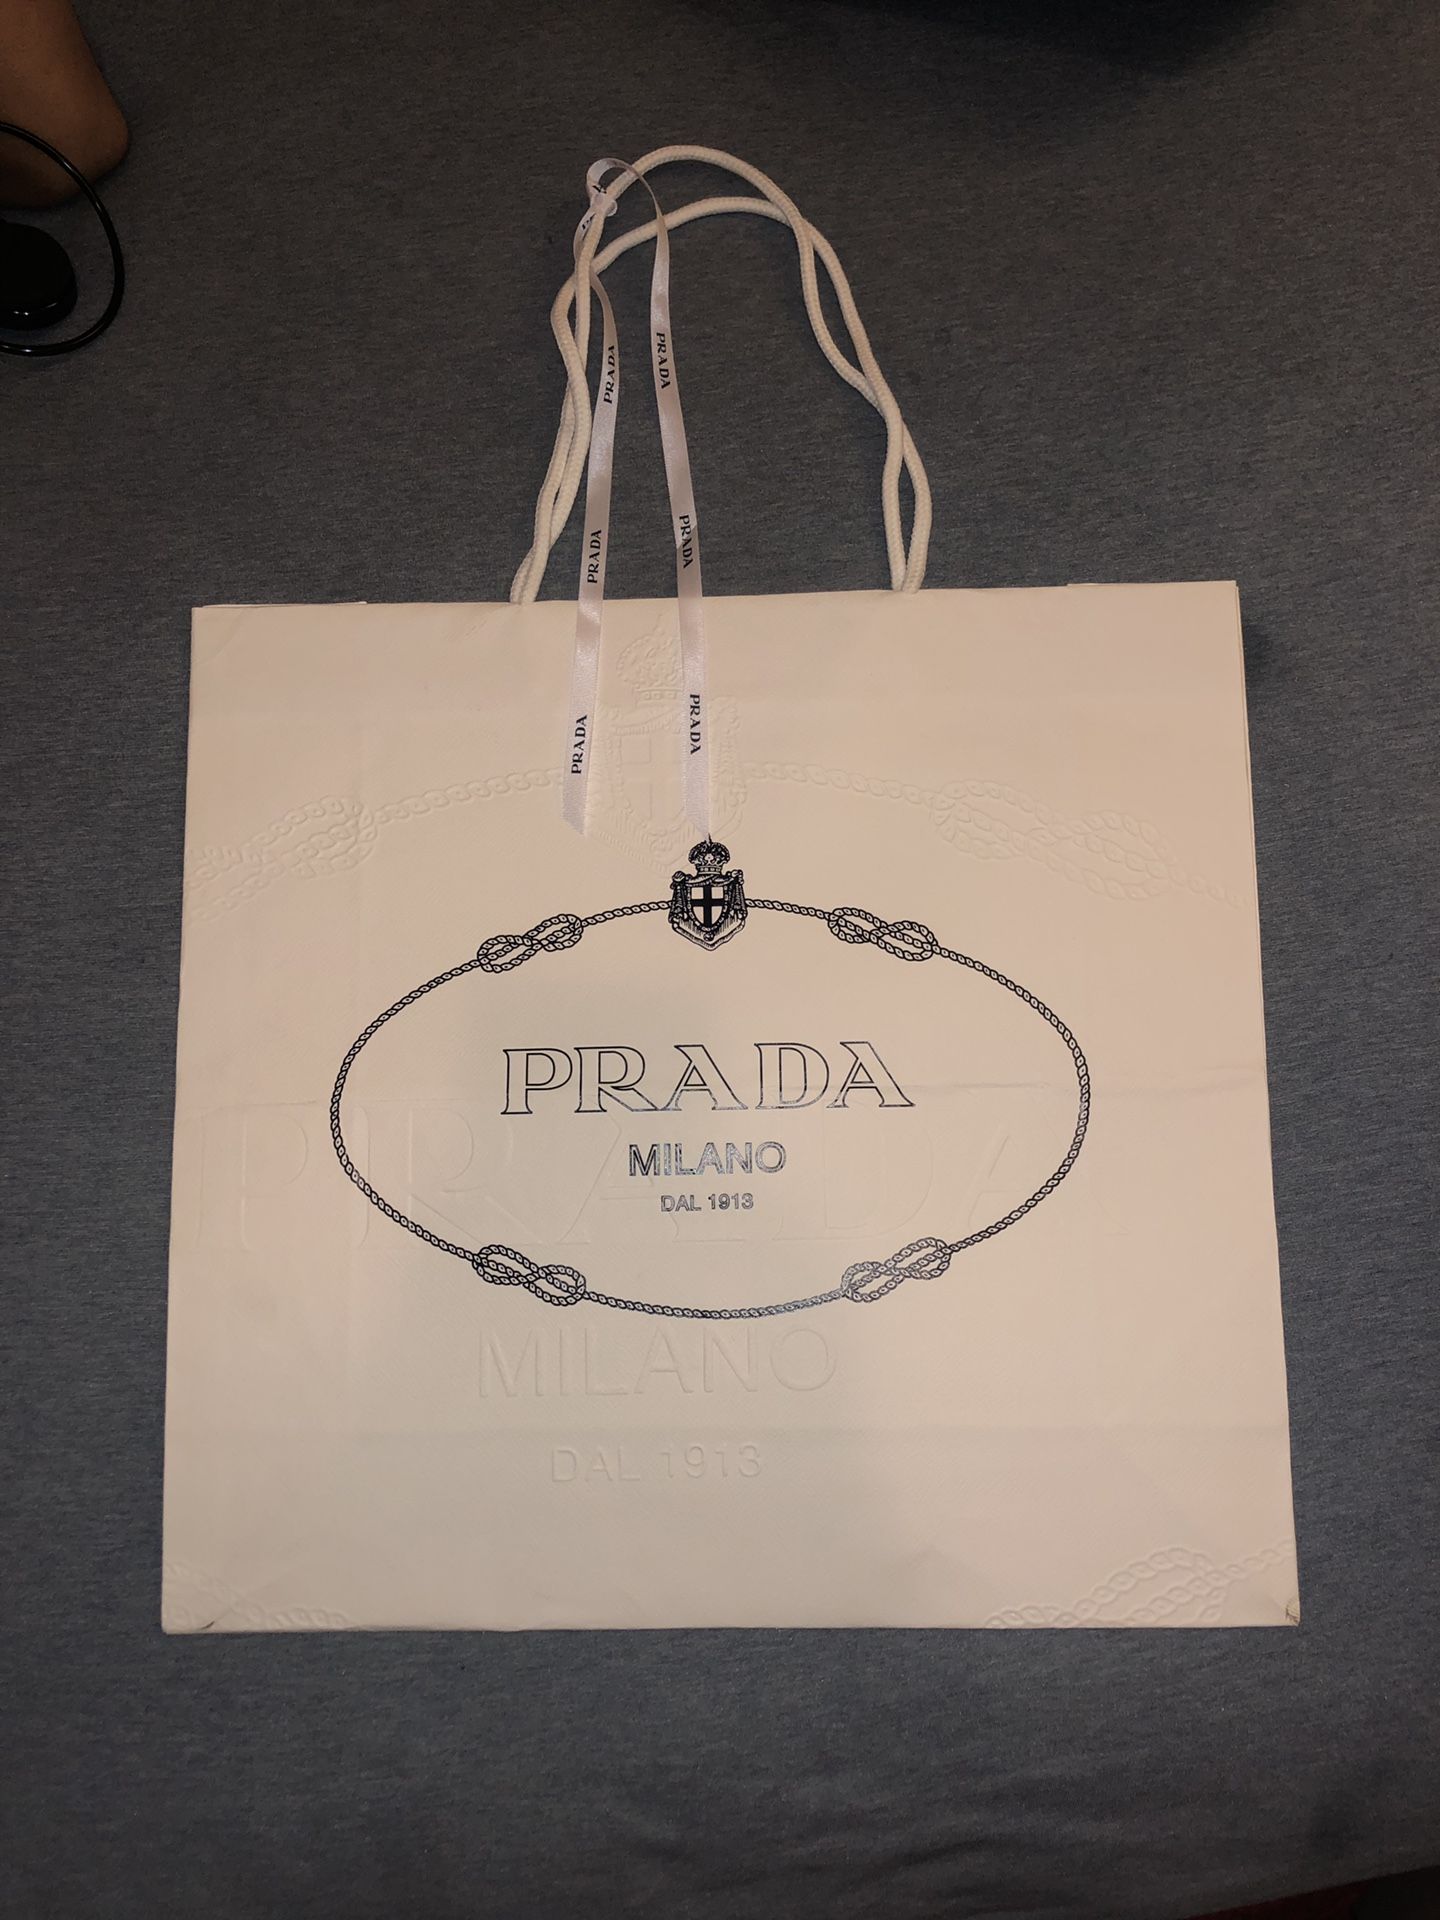 PRADA MILANO Shopping Bag + Ribbon for Sale in New York, NY - OfferUp